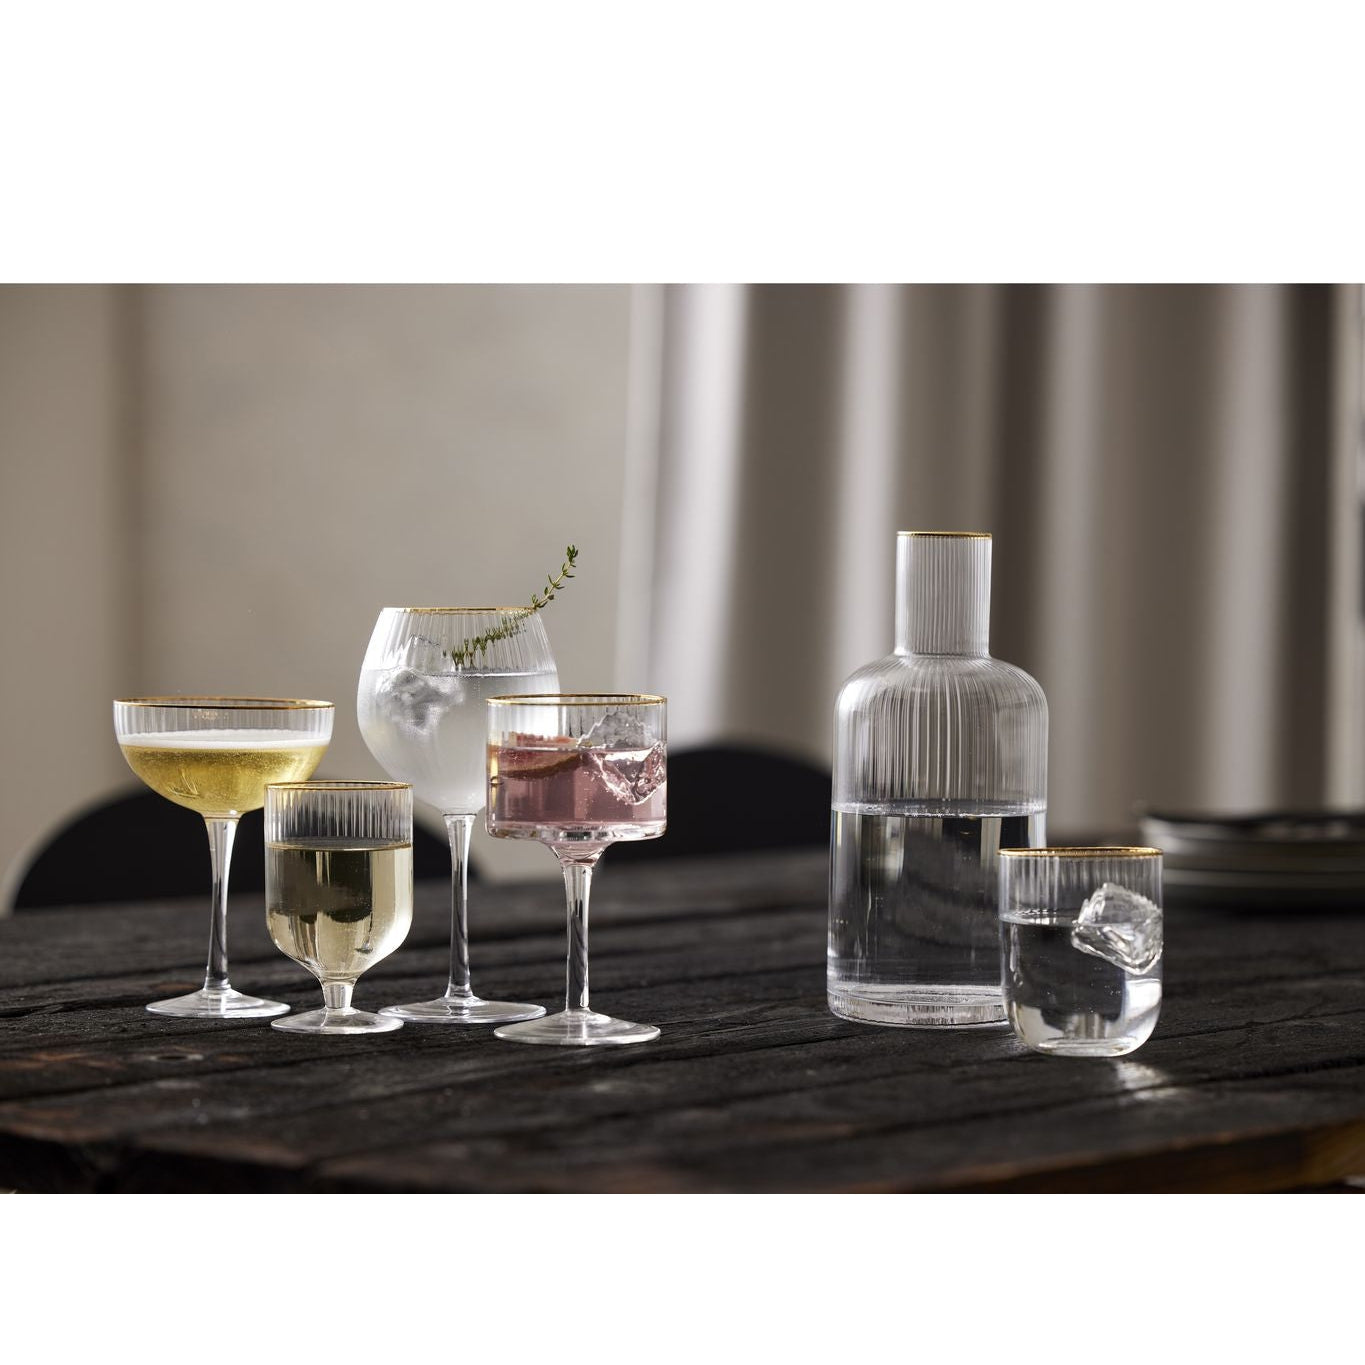 Lyngby Glas Palermo Gin & Tonic Glass 65 CL, 4 stk.